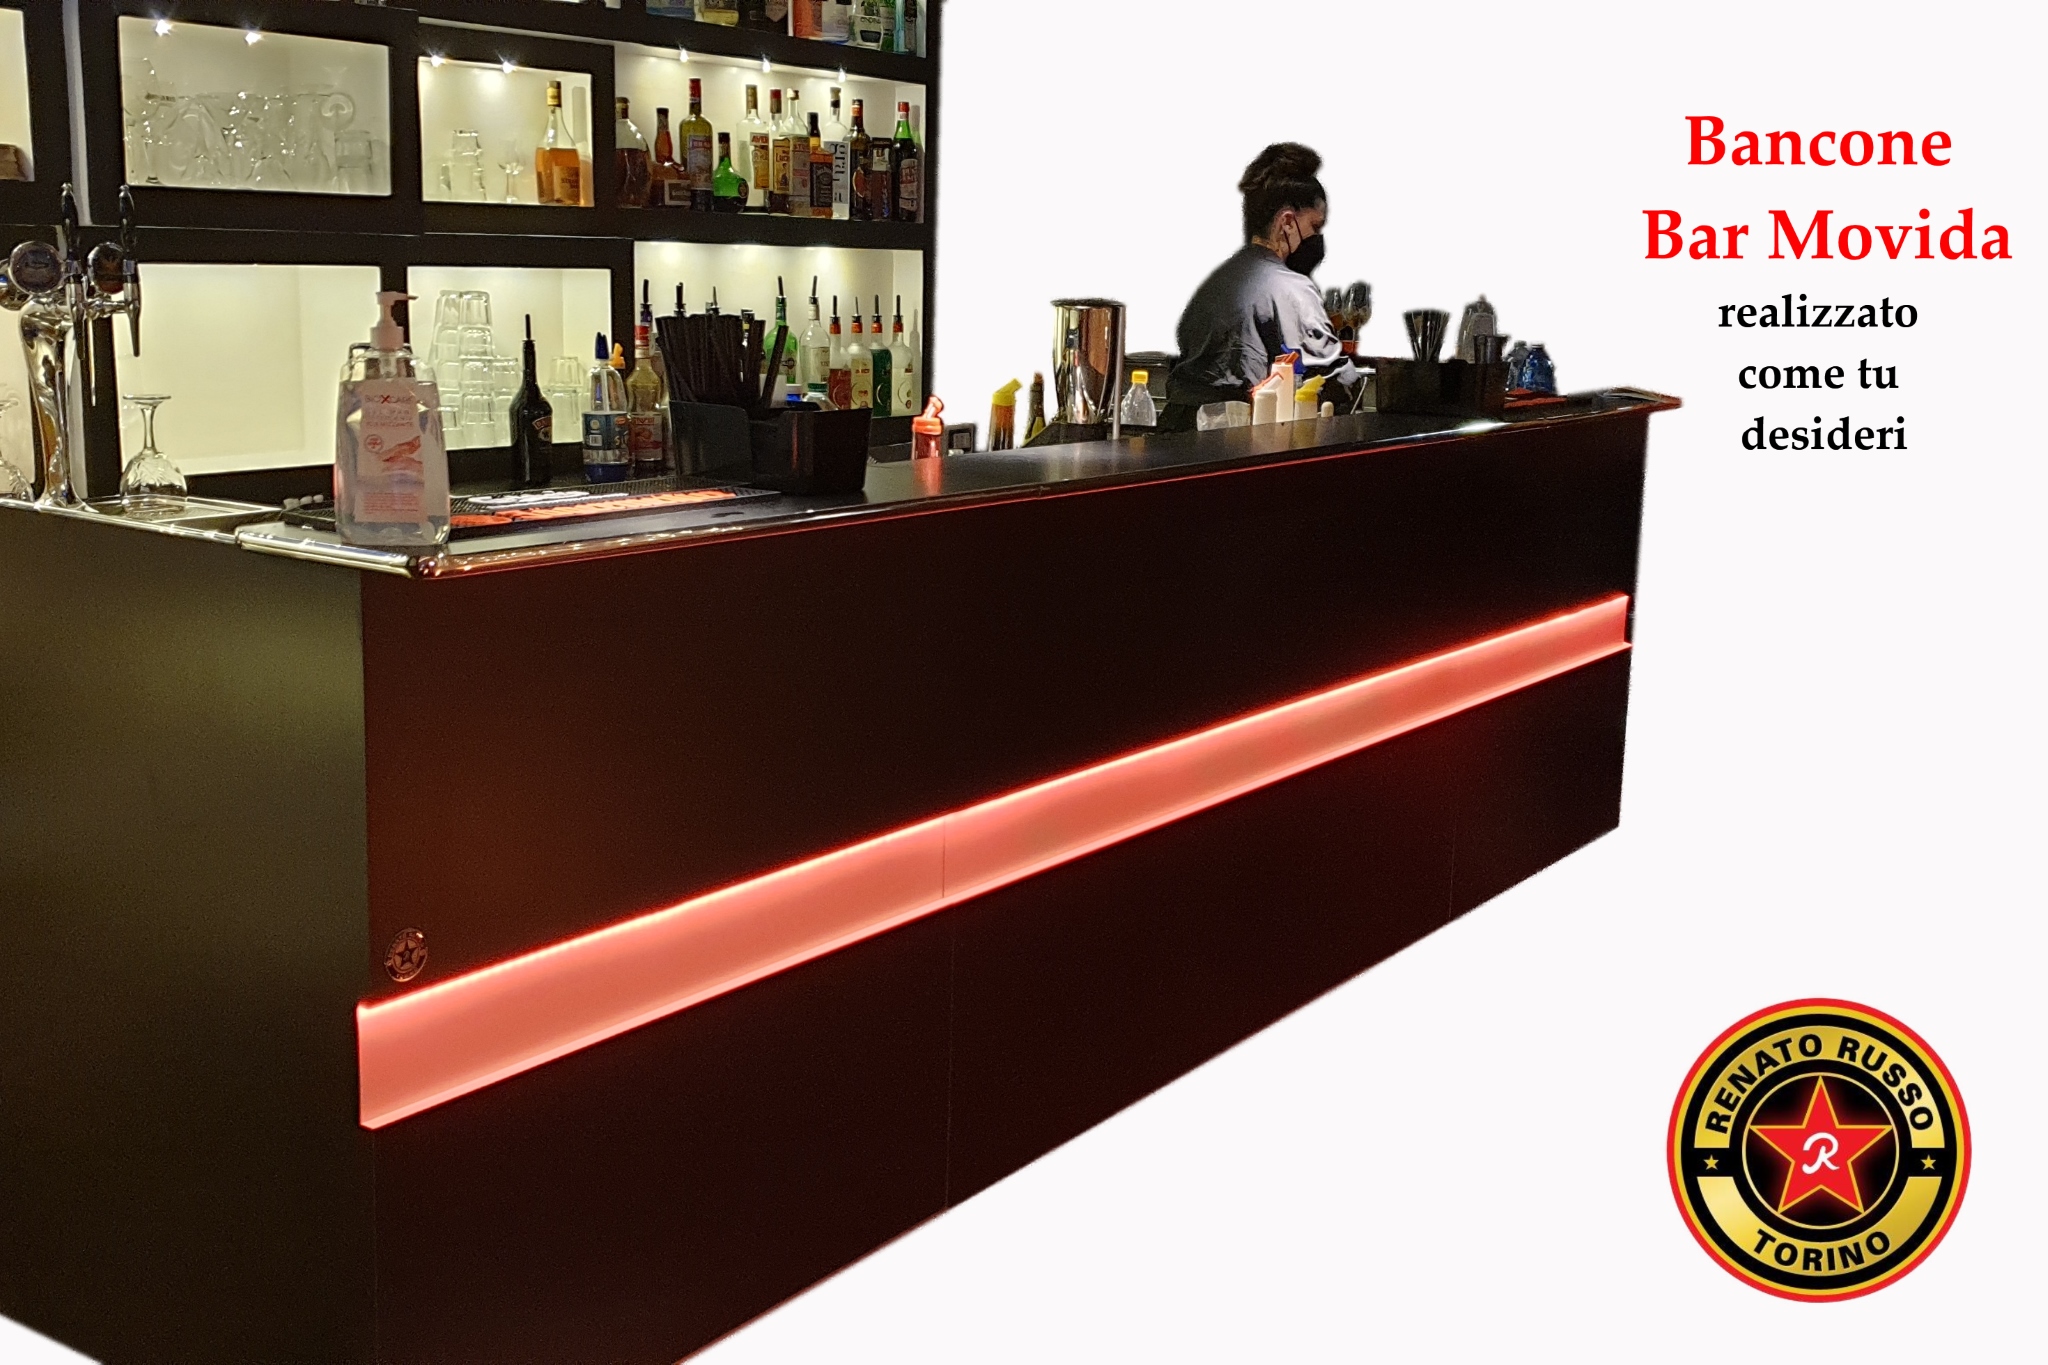 https://www.bar-negozi-ristoranti.it/wp-content/uploads/2021/06/Movida-bancone-bar-notturno-banco-bar-per-disconteca-banco-bar-per-movida-banconi-bar-per-la-vita-notturna-miglior-prezzo.jpg